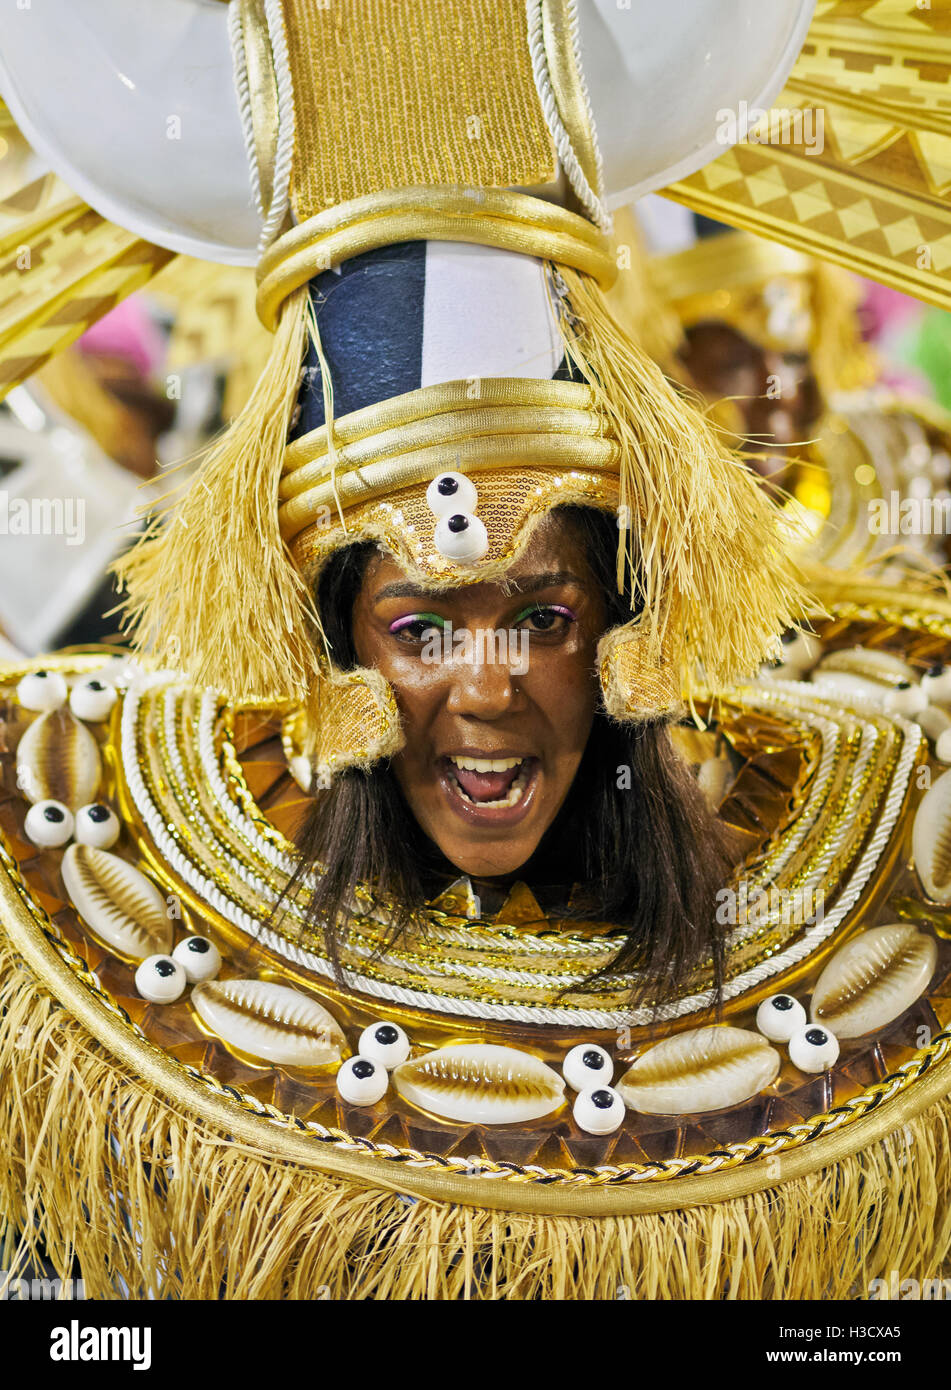 Brazil, State of Rio de Janeiro, City of Rio de Janeiro, Samba Dancer in the Carnival Parade at The Sambadrome Marques de Sapuca Stock Photo